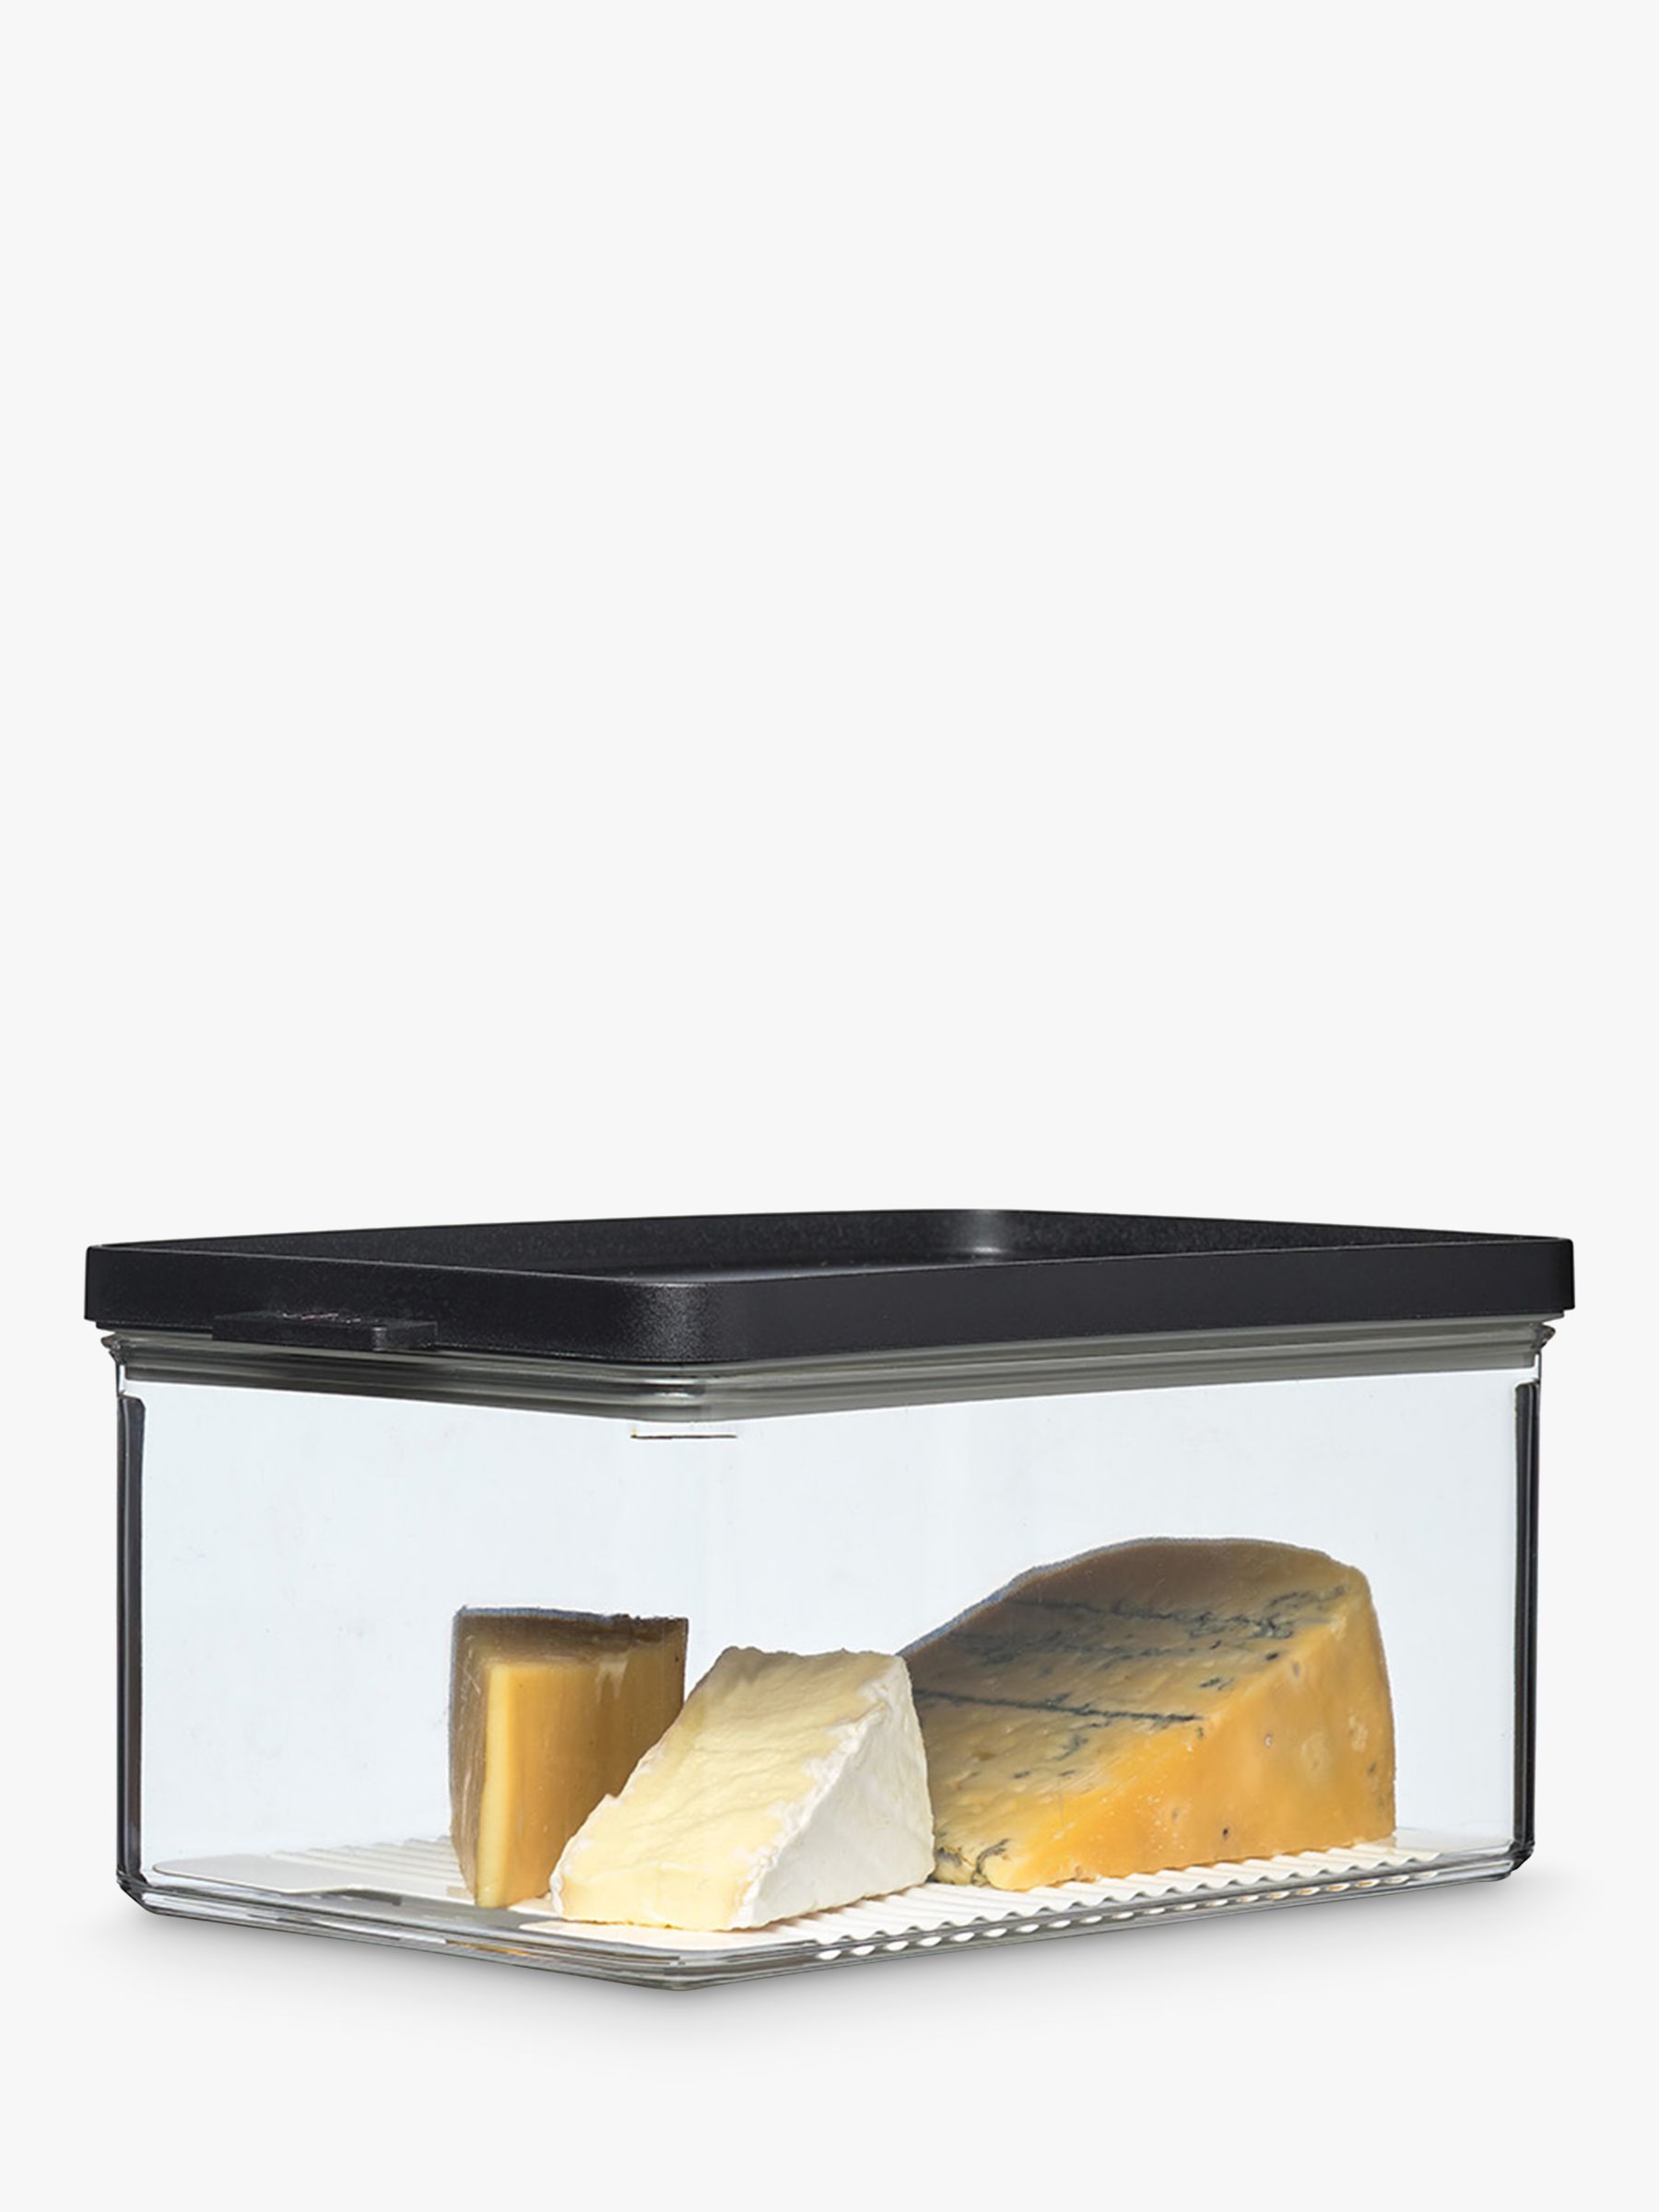 Mepal Omnia Fridge Storage Box for Cheese / Nordic White